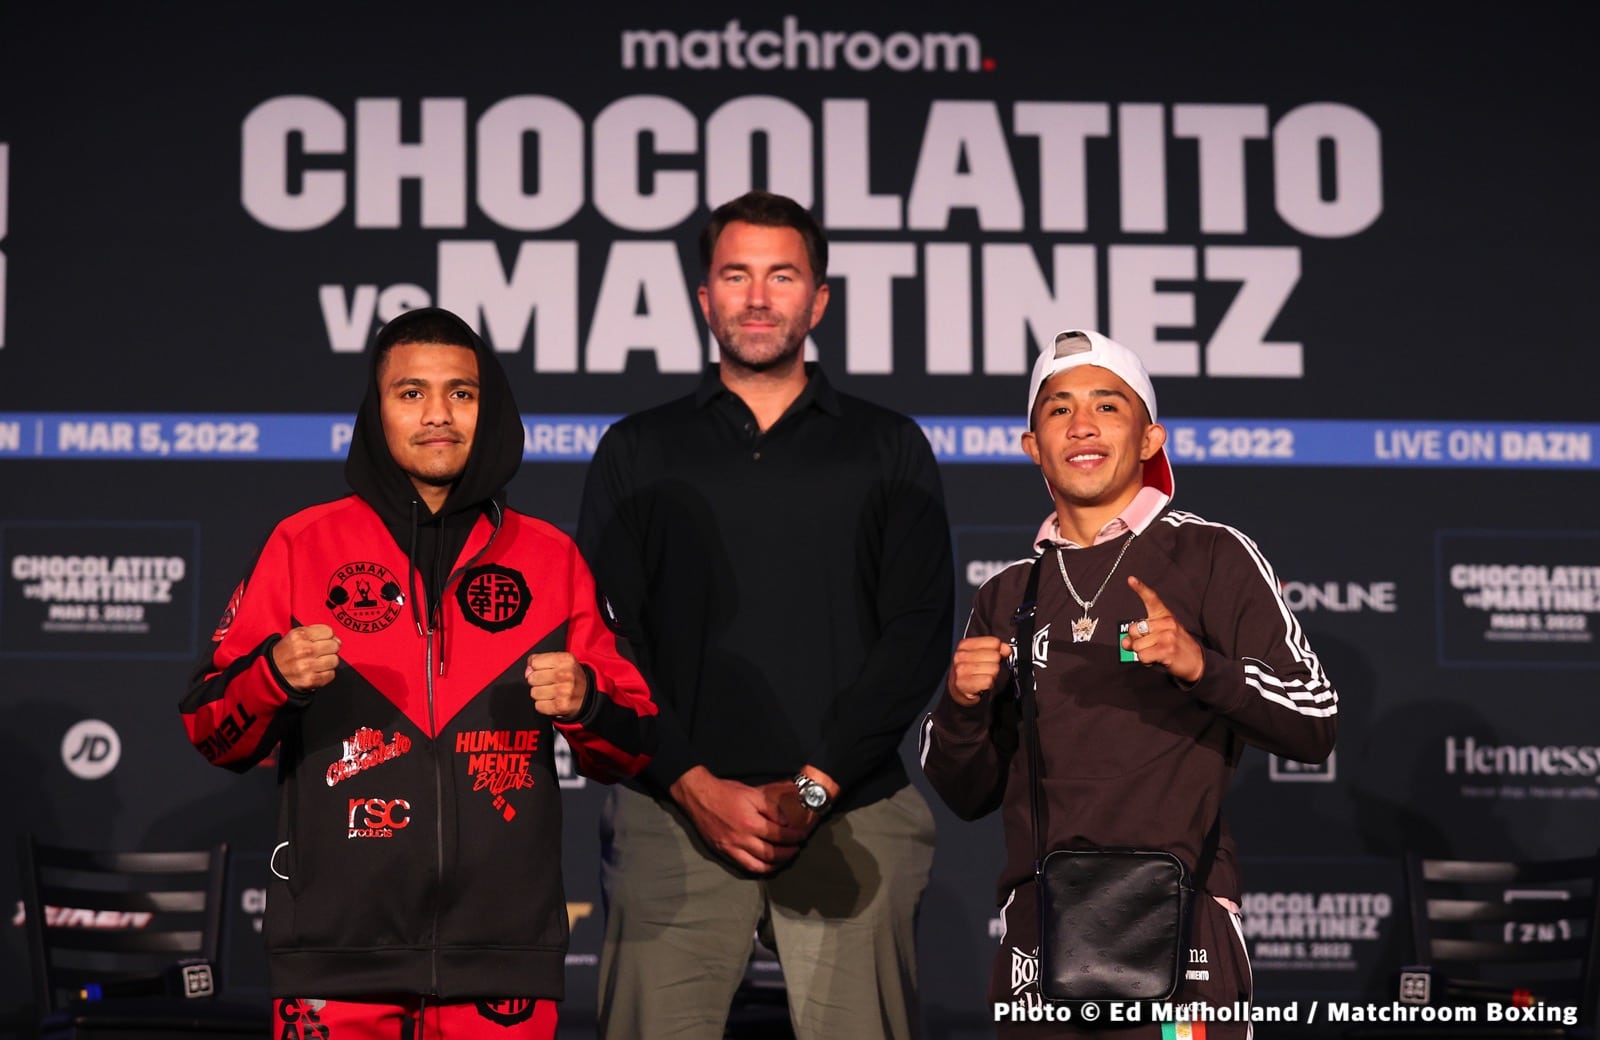 Roman Chocolatito Gonzalez motivated for Julio Cesar Martinez fight this Saturday on DAZN